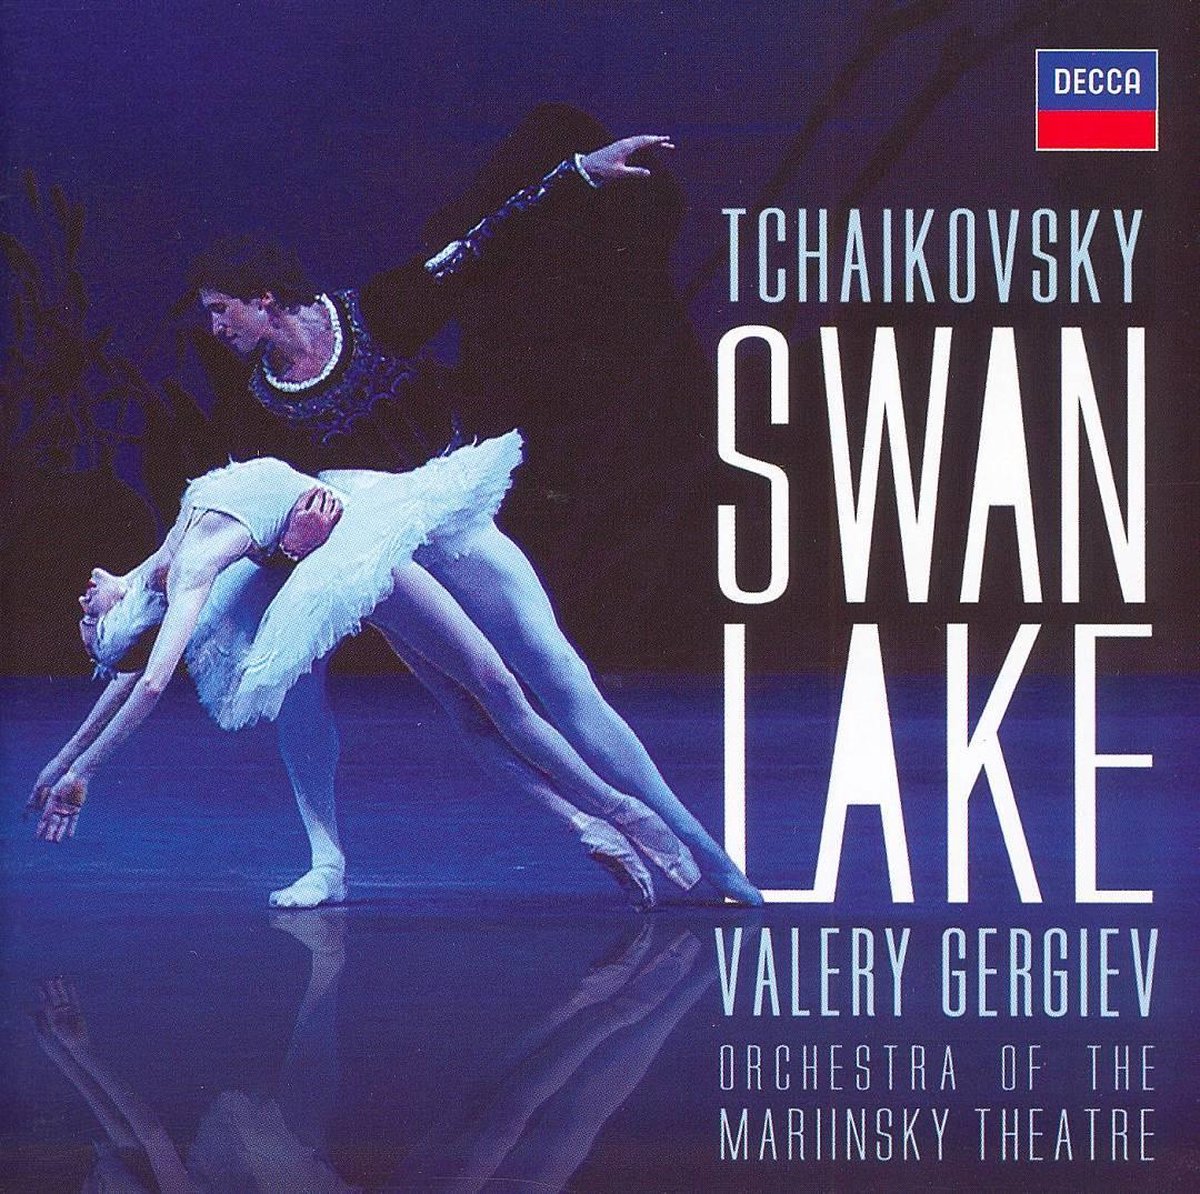 Tchaikovsky Swan Lake Cd Valery Gergiev Orchestra Of The Mariinsky Theatre Cd 3218